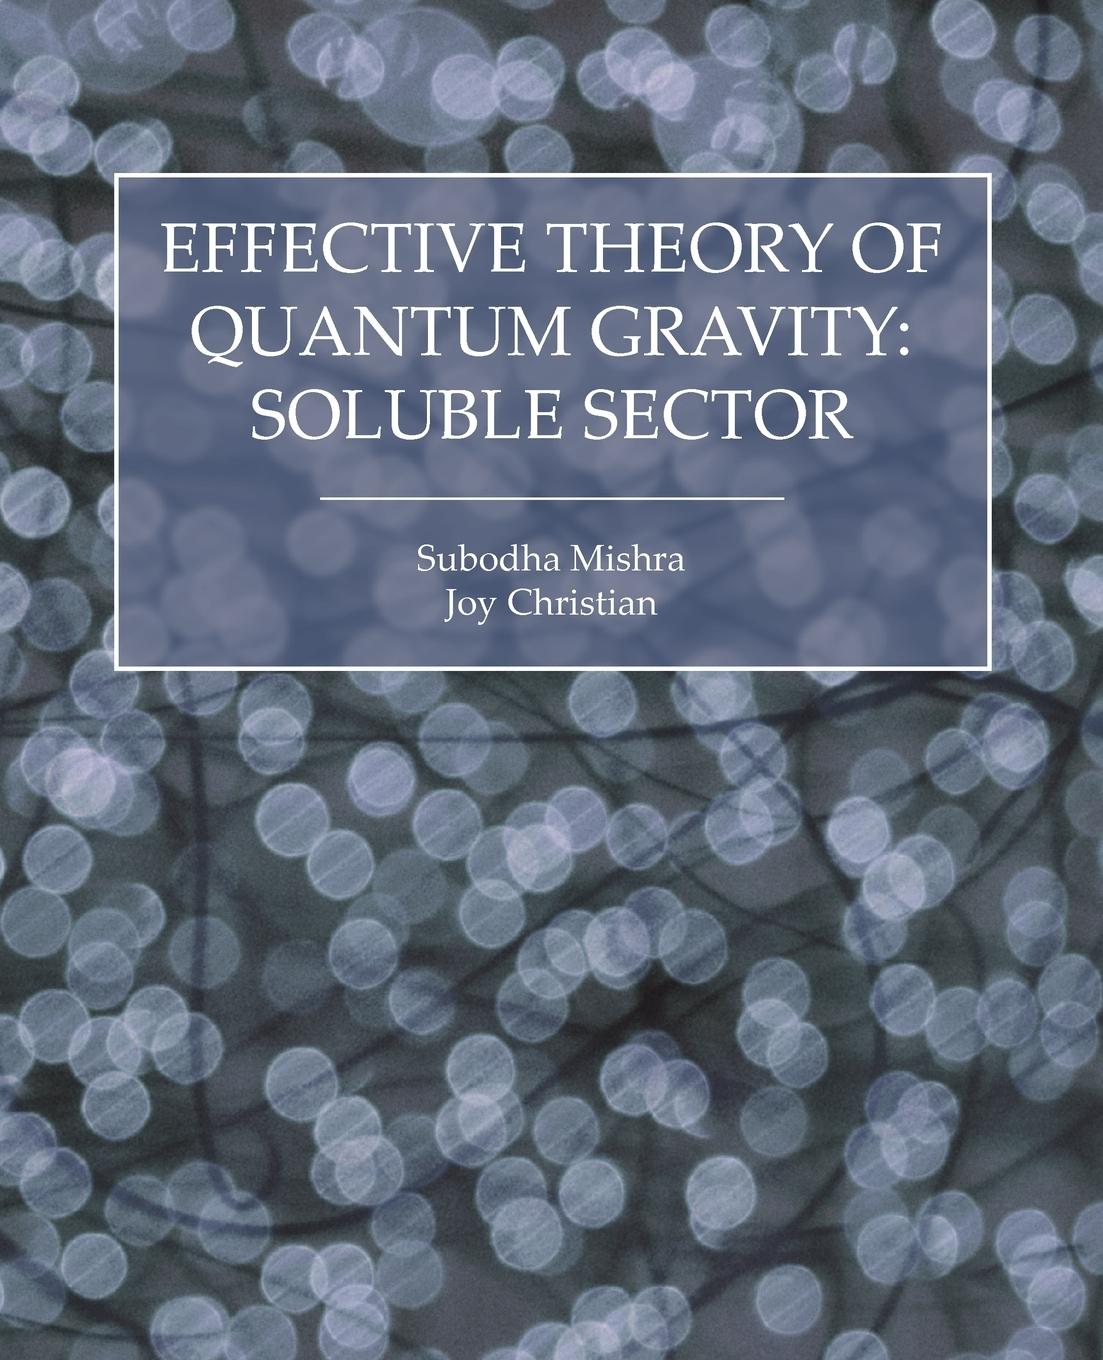 Effective Theory of Quantum Gravity - Mishra, Subodha Christian, Joy